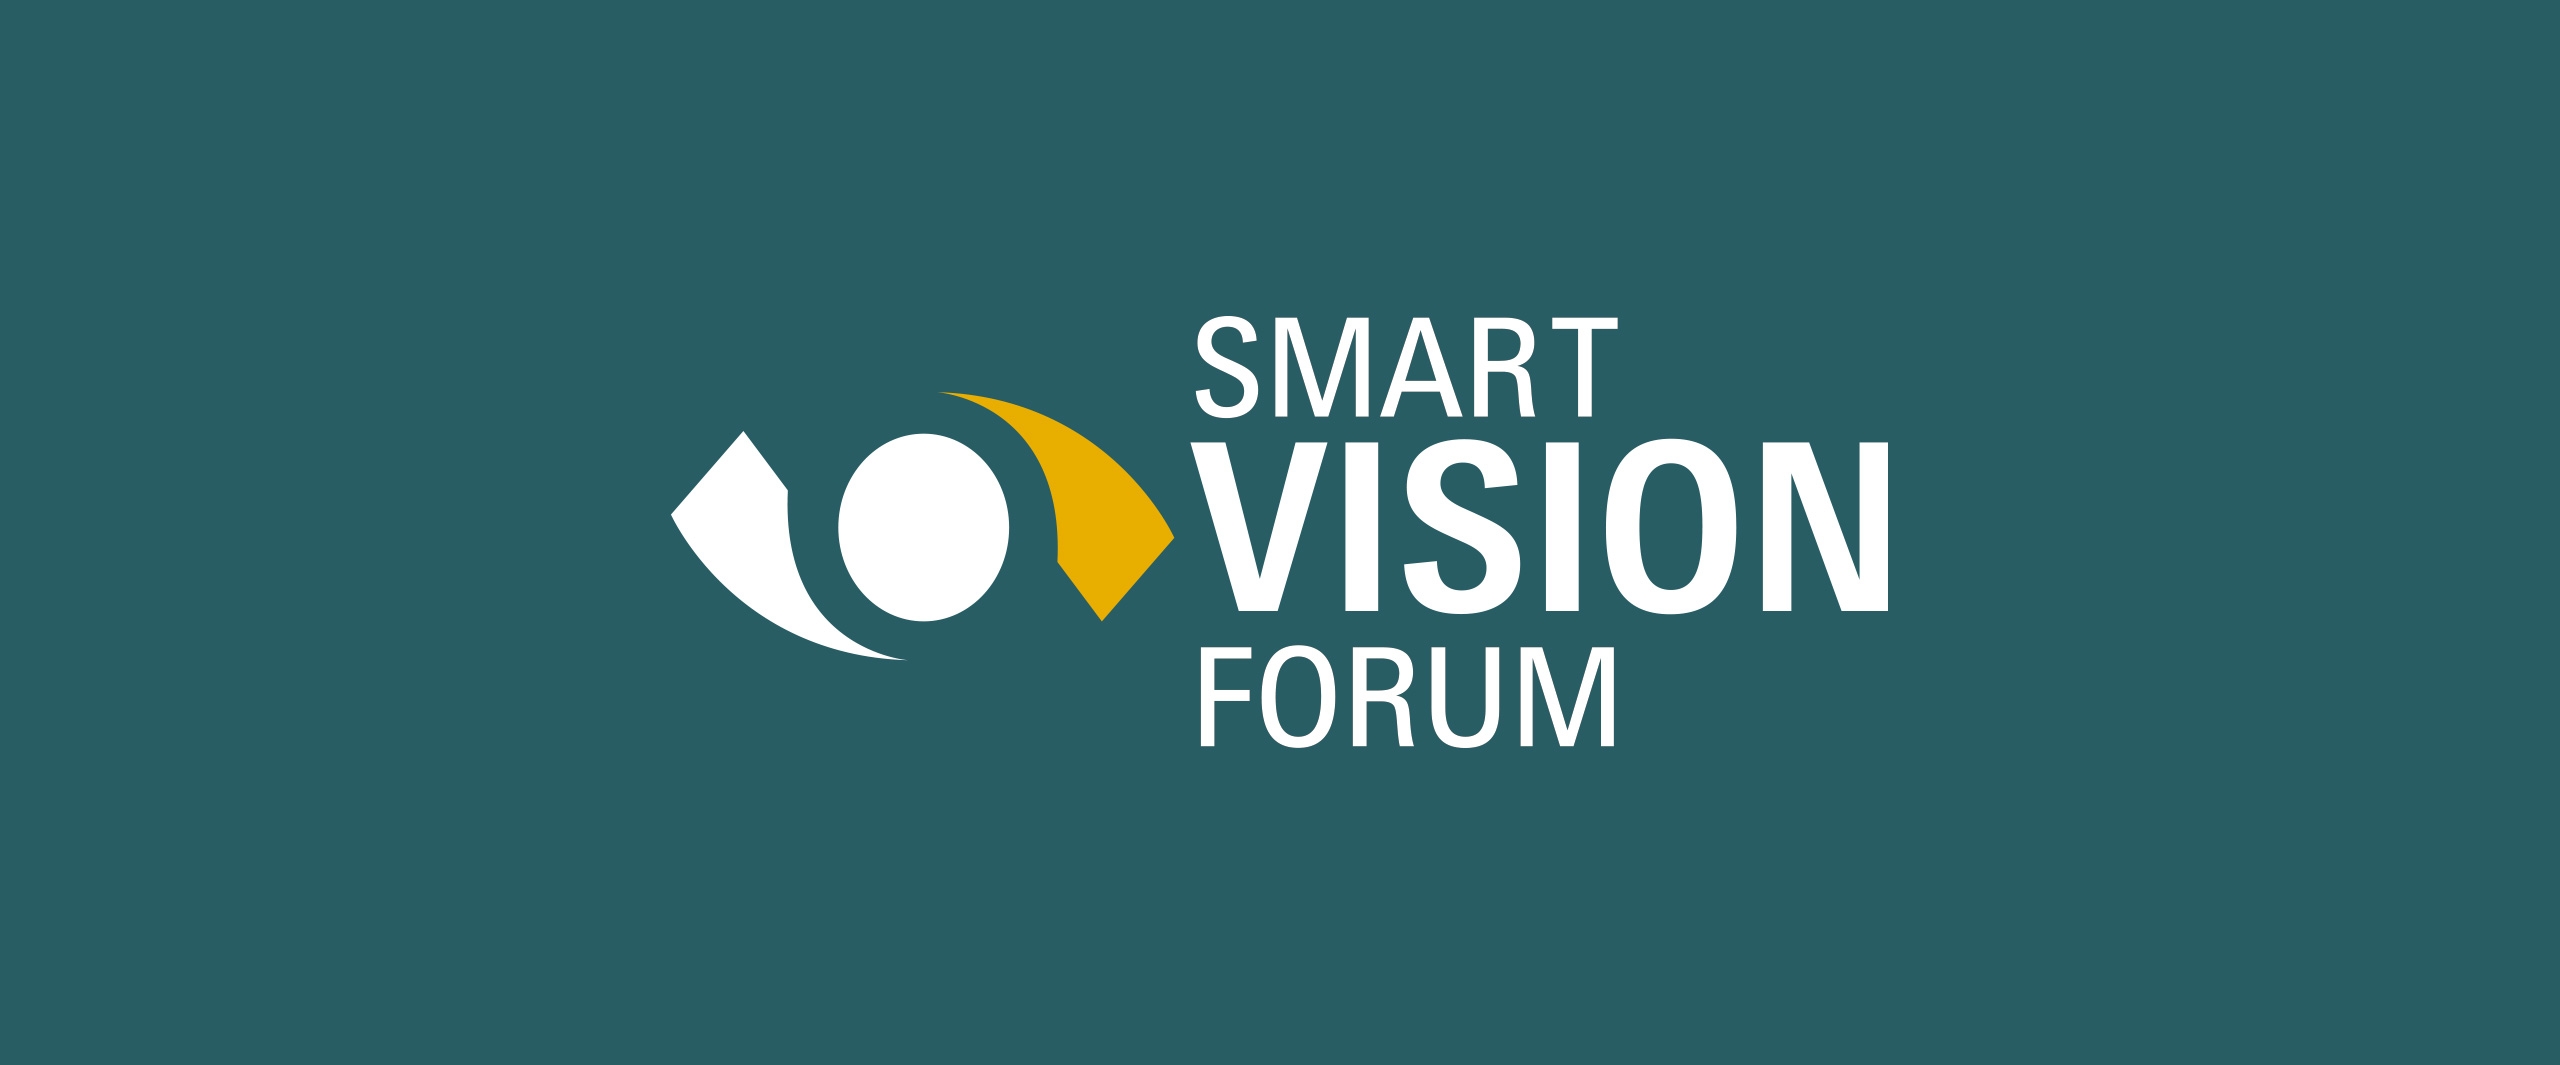 <b>SMART VISION FORUM - BOLOGNA JUNE 25TH 2019</b>